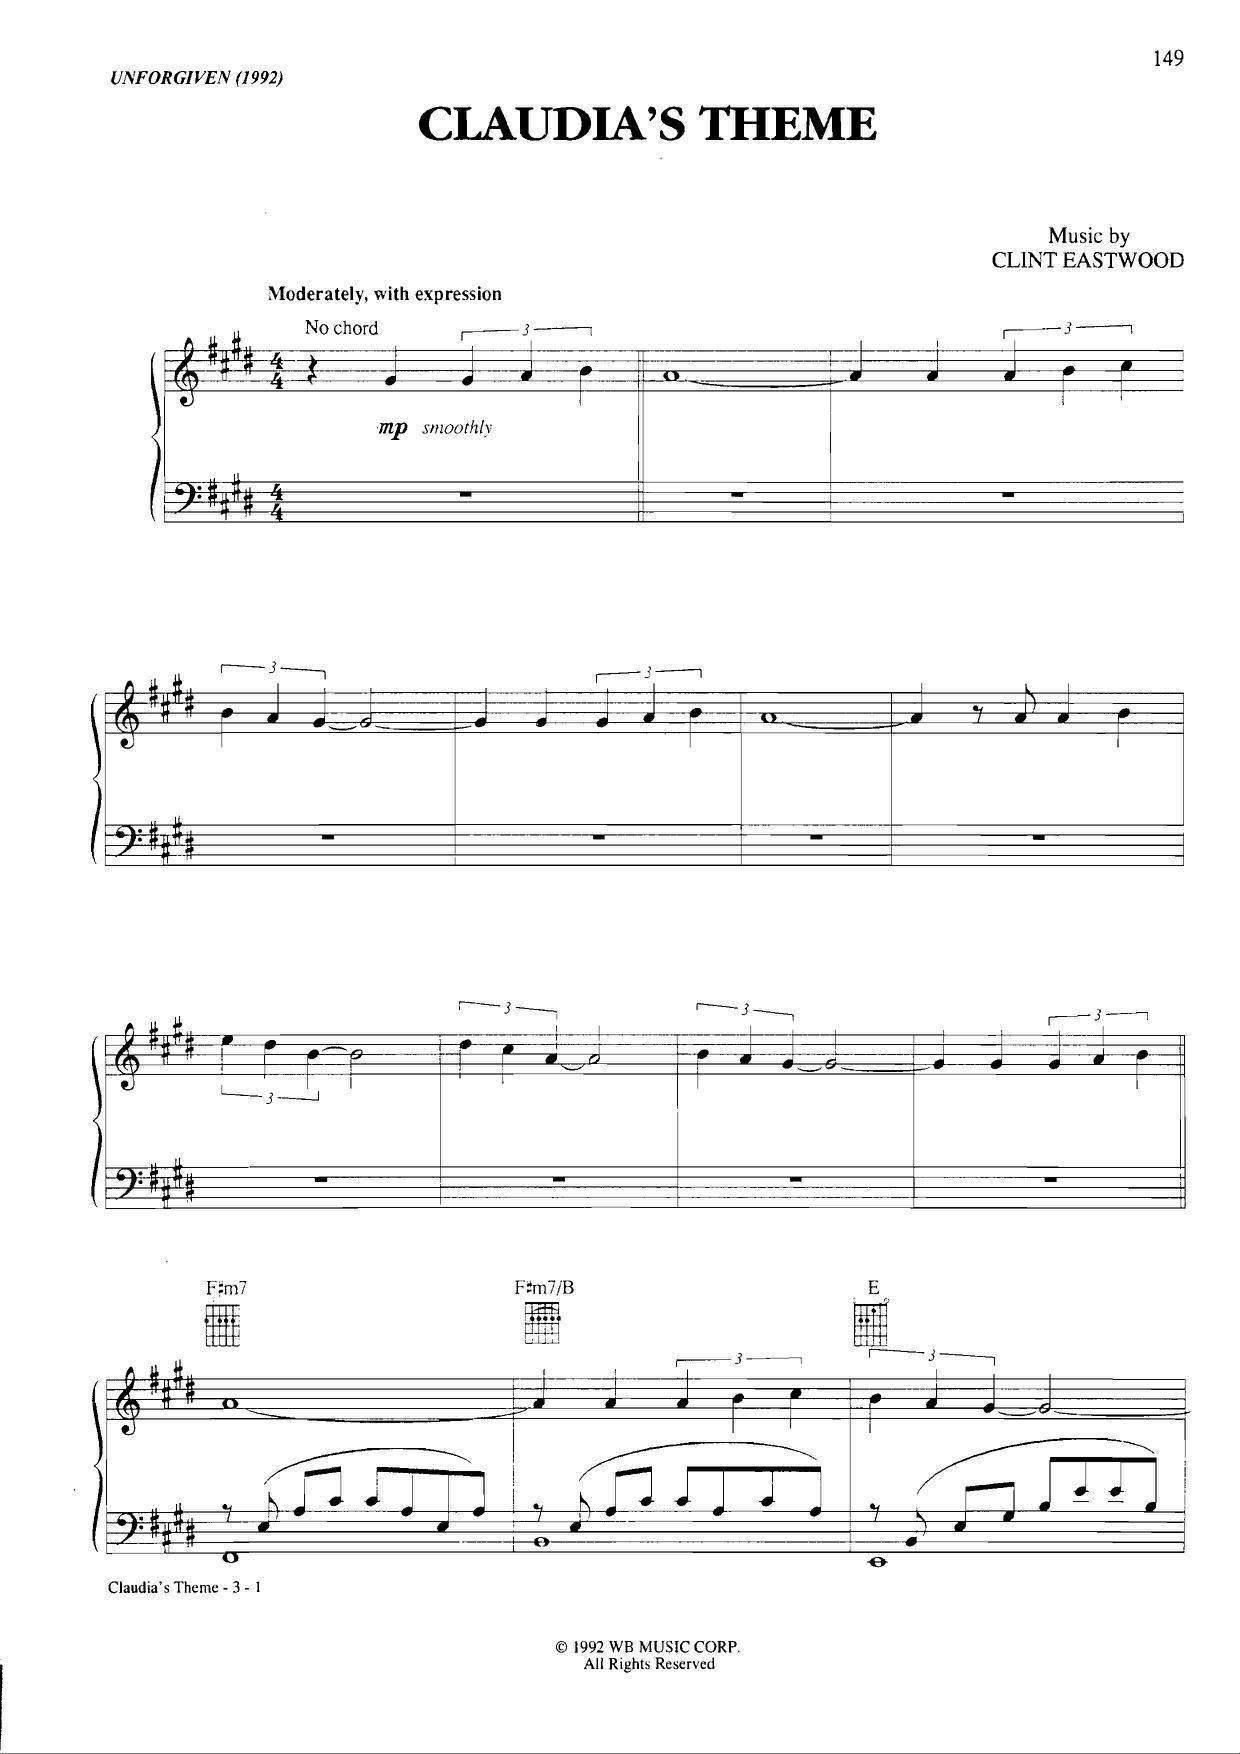 Uanforgiven - Claudia's Theme Score